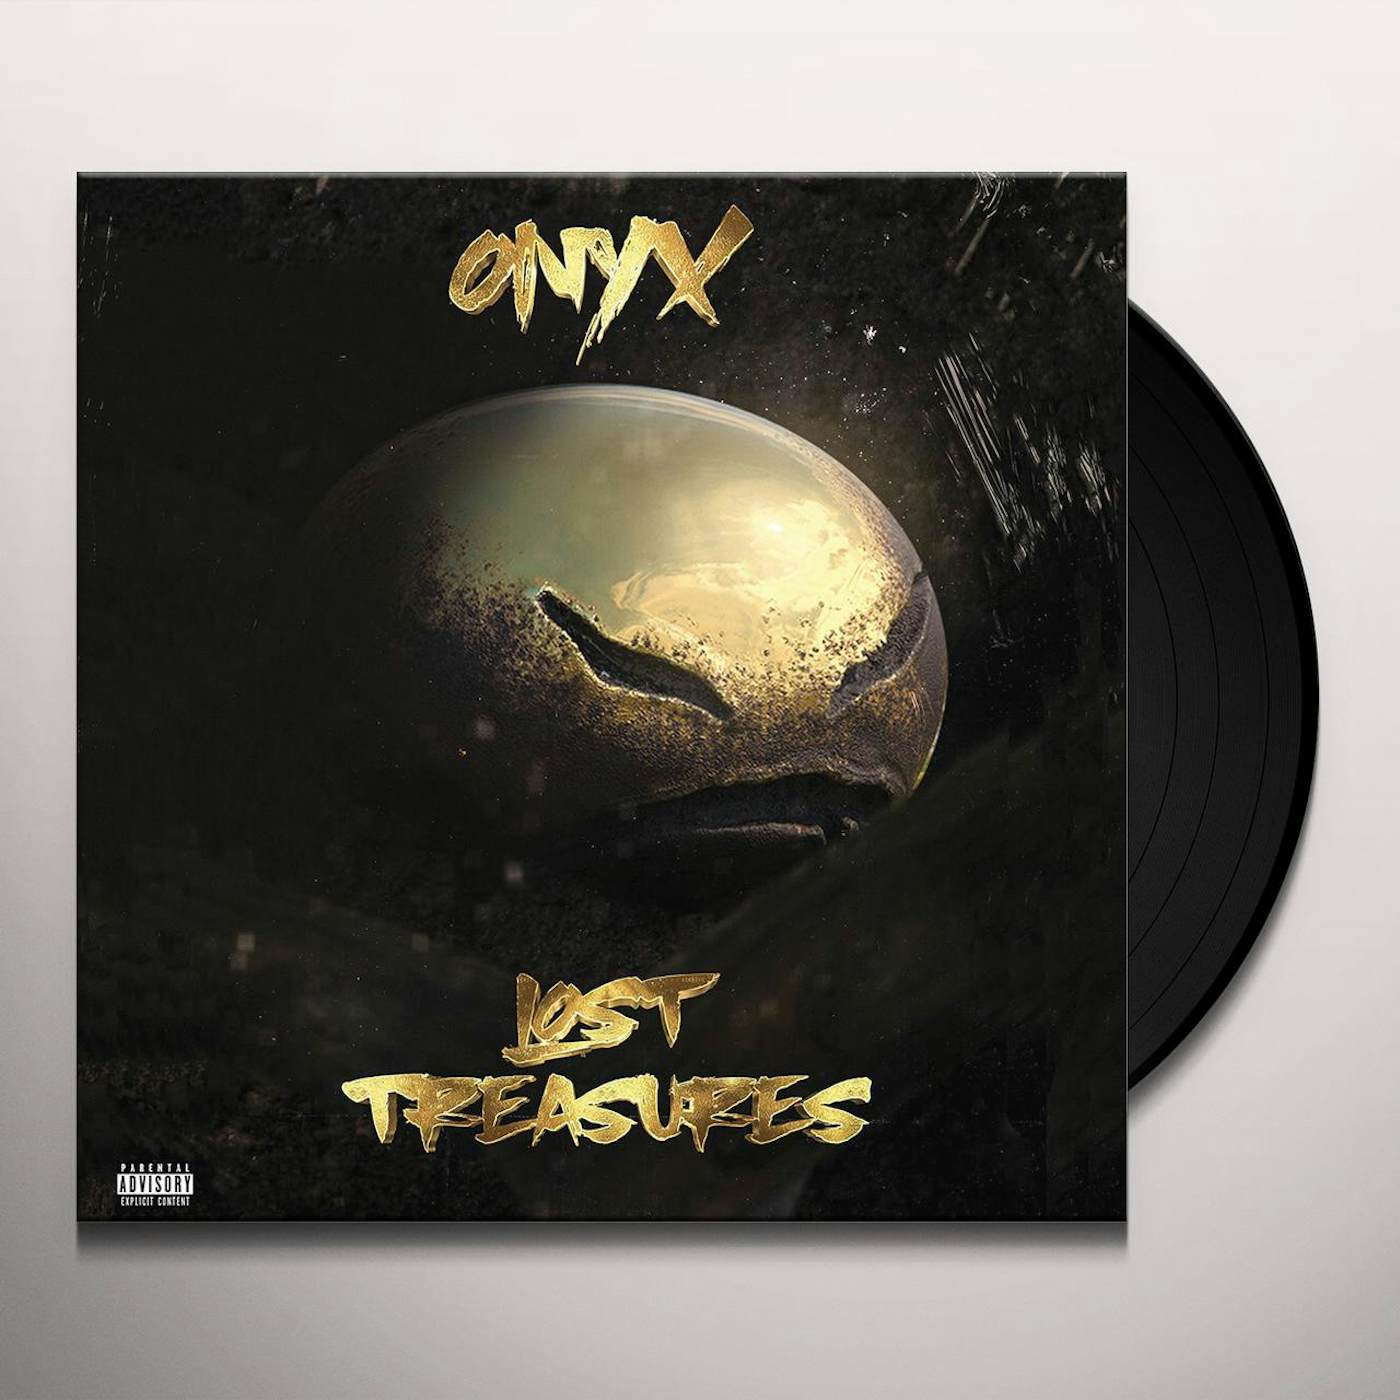 Onyx Lost Treasures Vinyl Record